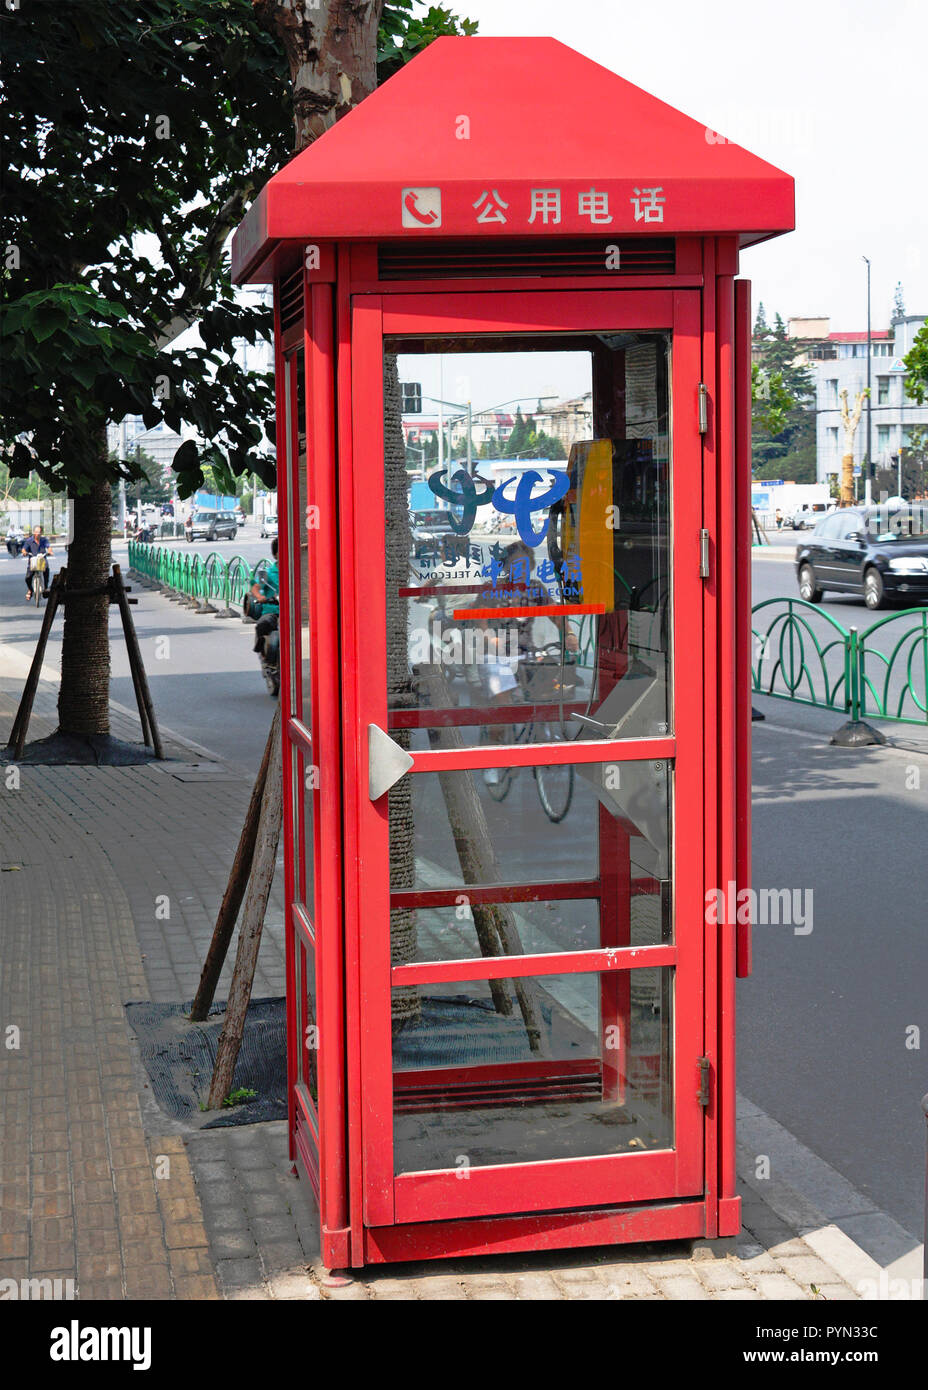 Public telephone box situated on pavement alongside a main road, Shanghai, China Stock Photo